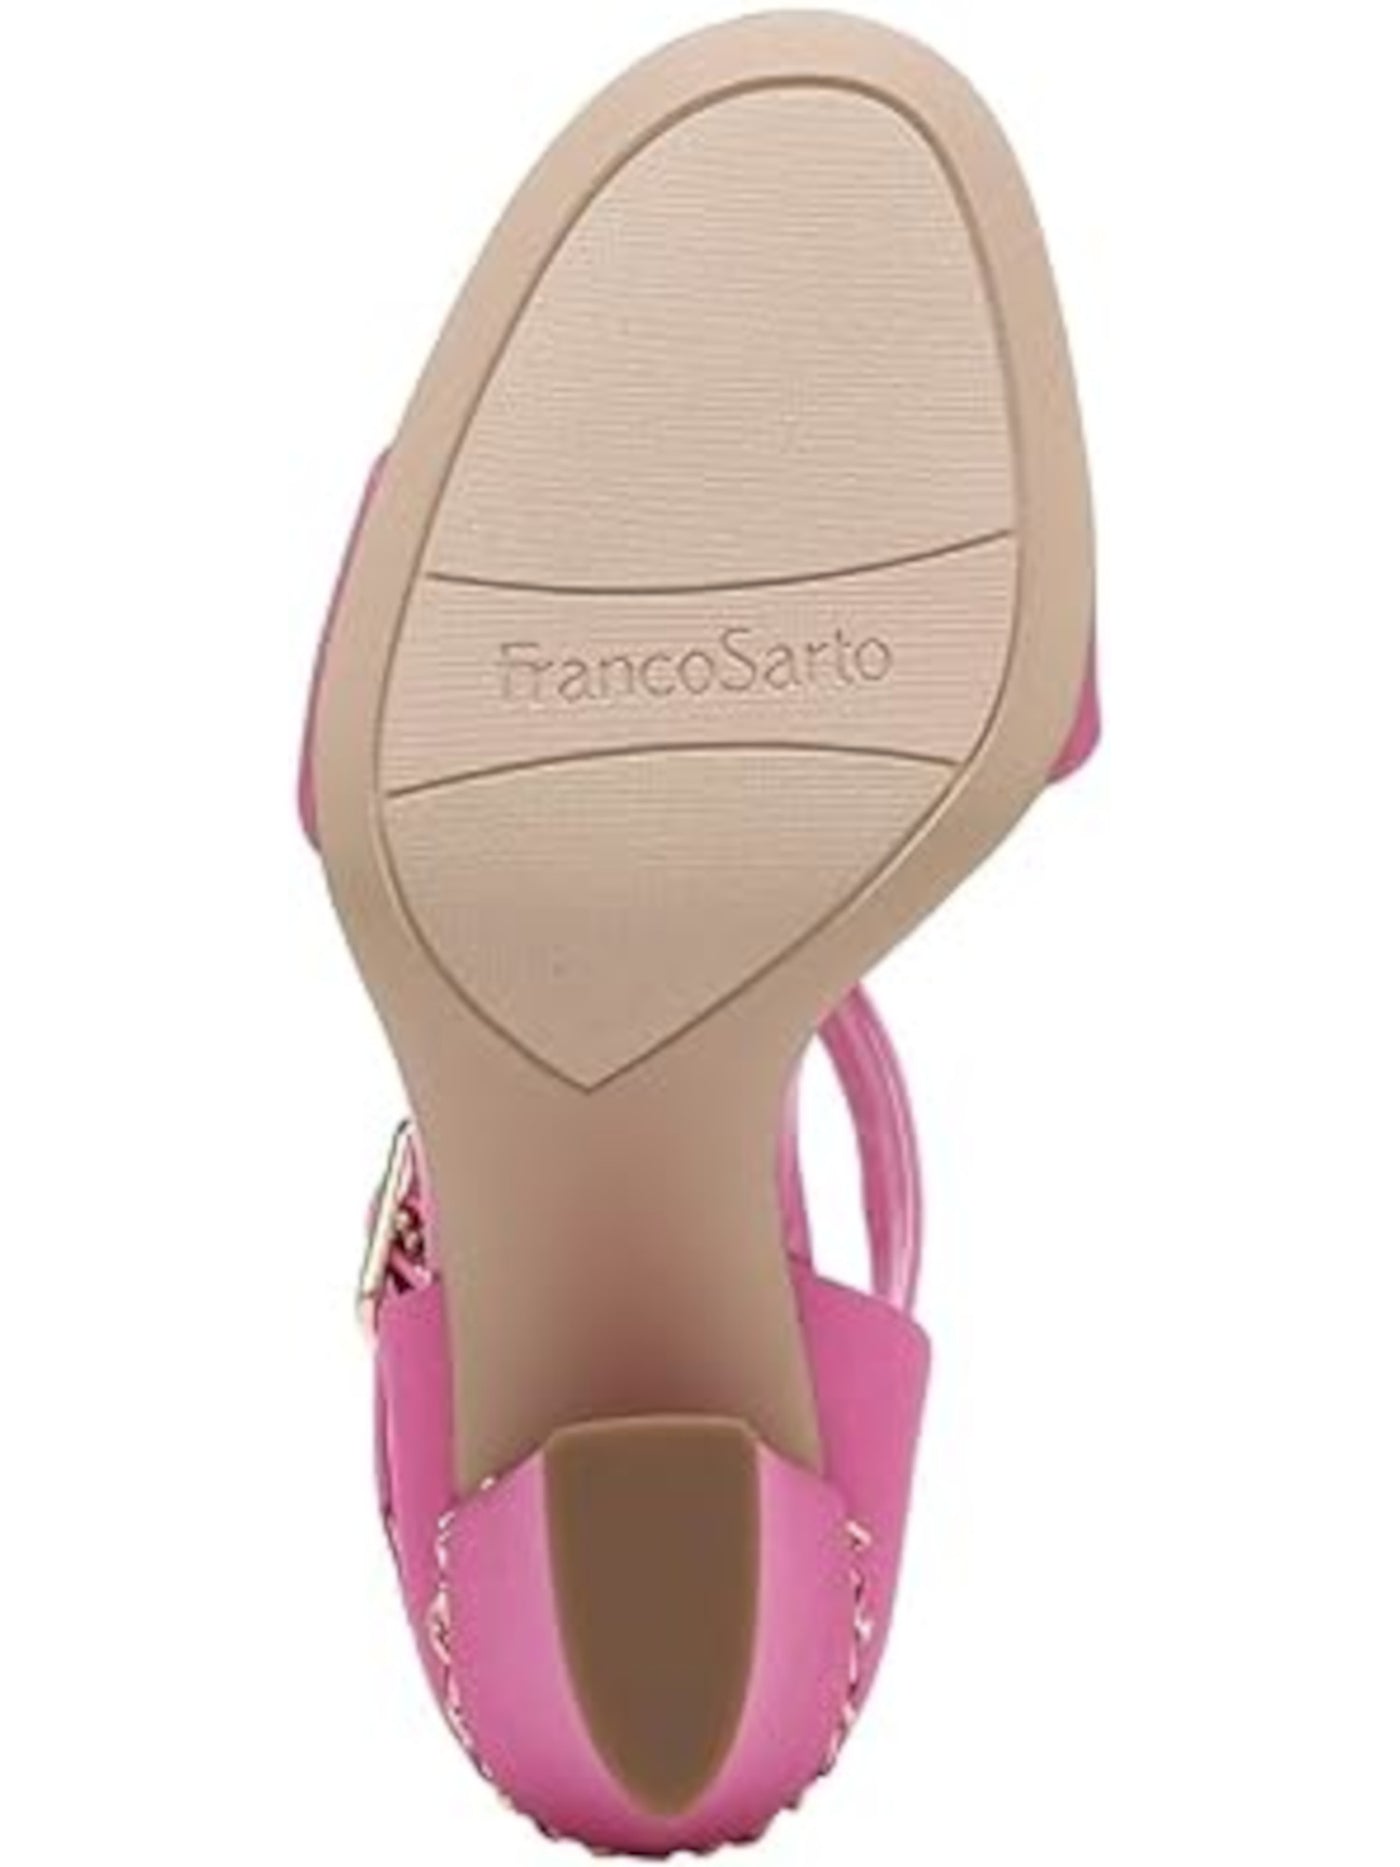 FRANCO SARTO Womens Pink Goring Padded Ofelia Open Toe Block Heel Buckle Dress Sandals Shoes M